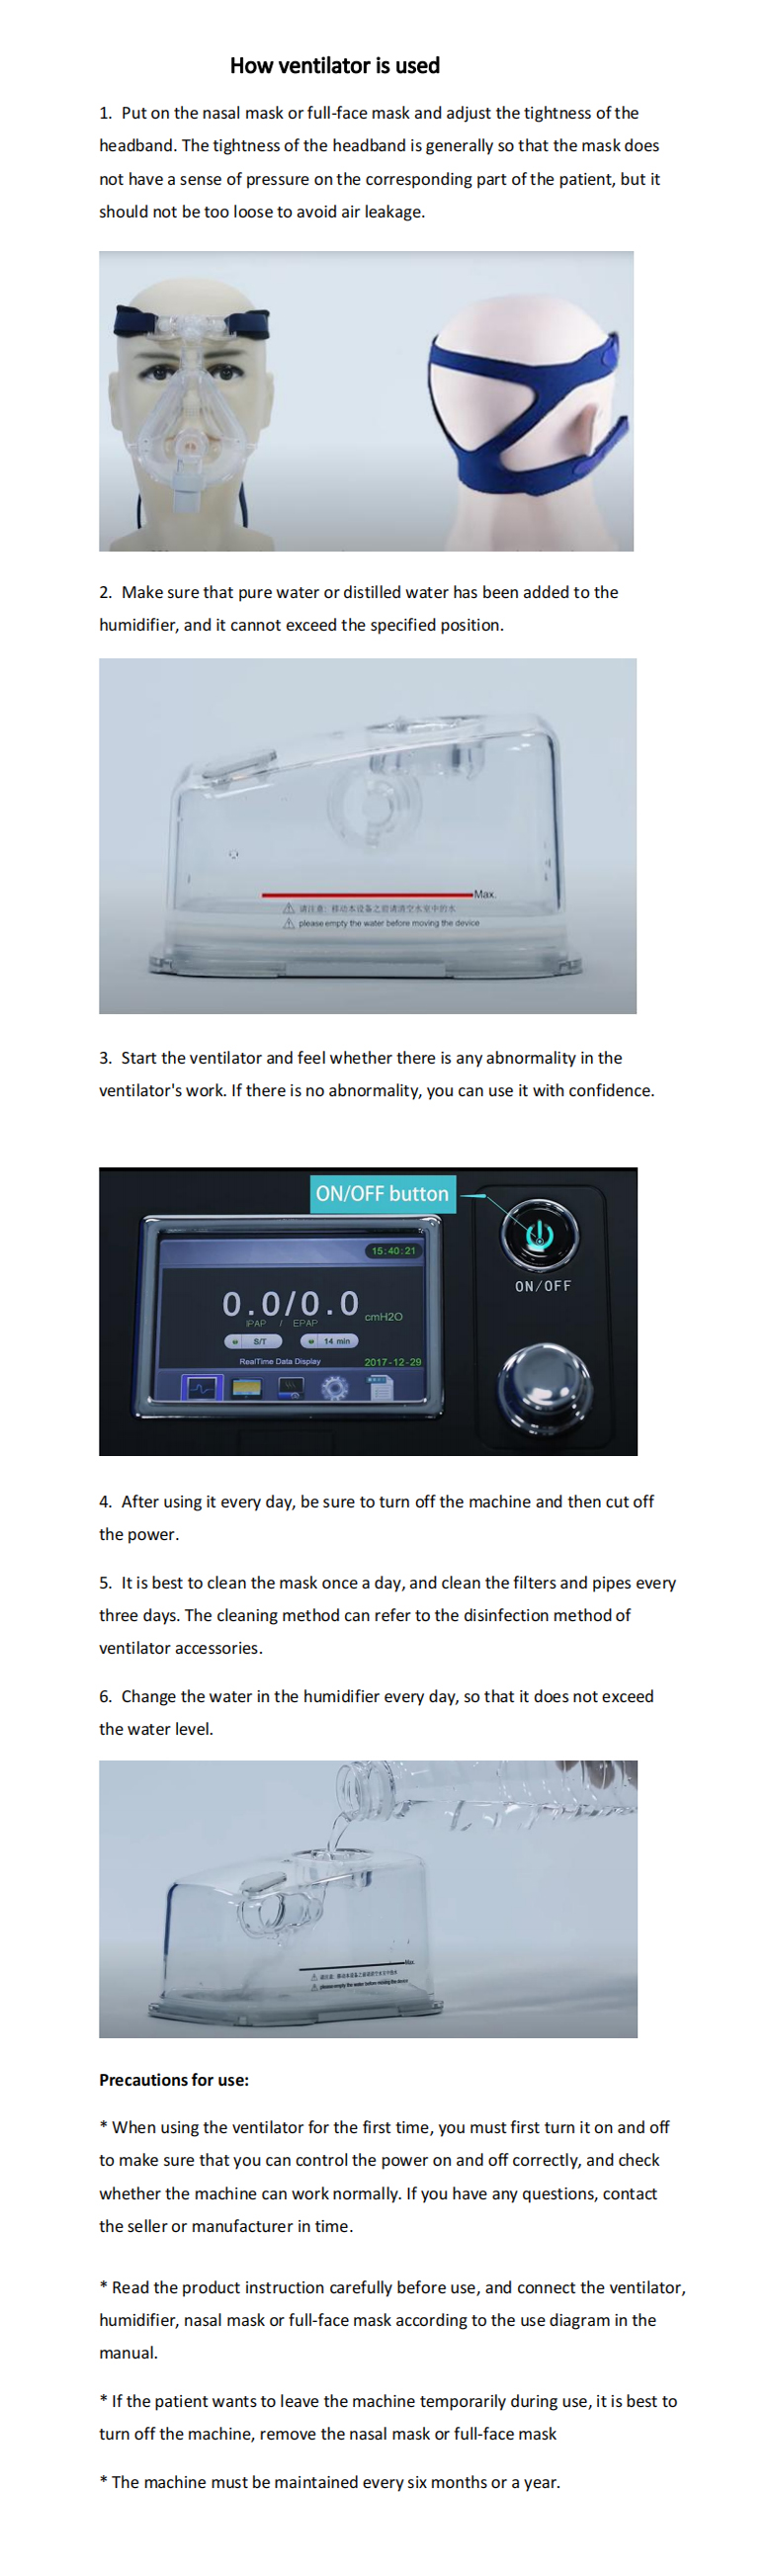 Correct use method of Ventilator